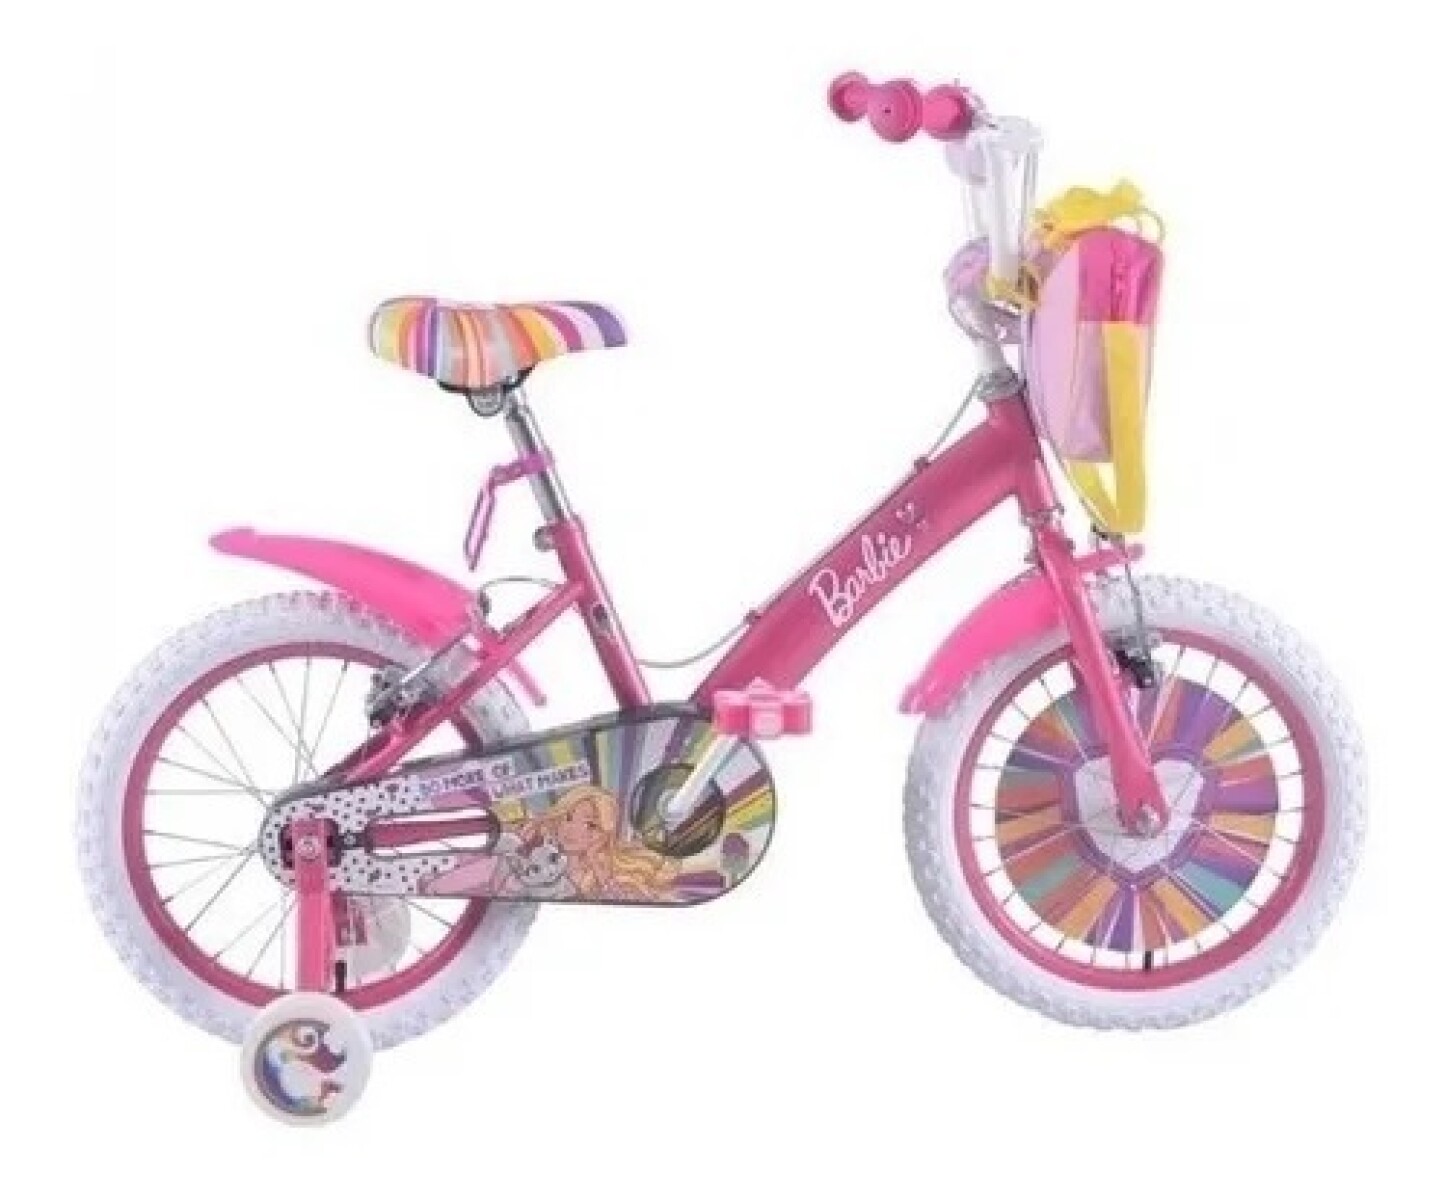 Bicicleta Barbie R.16 Niña - Rosado 